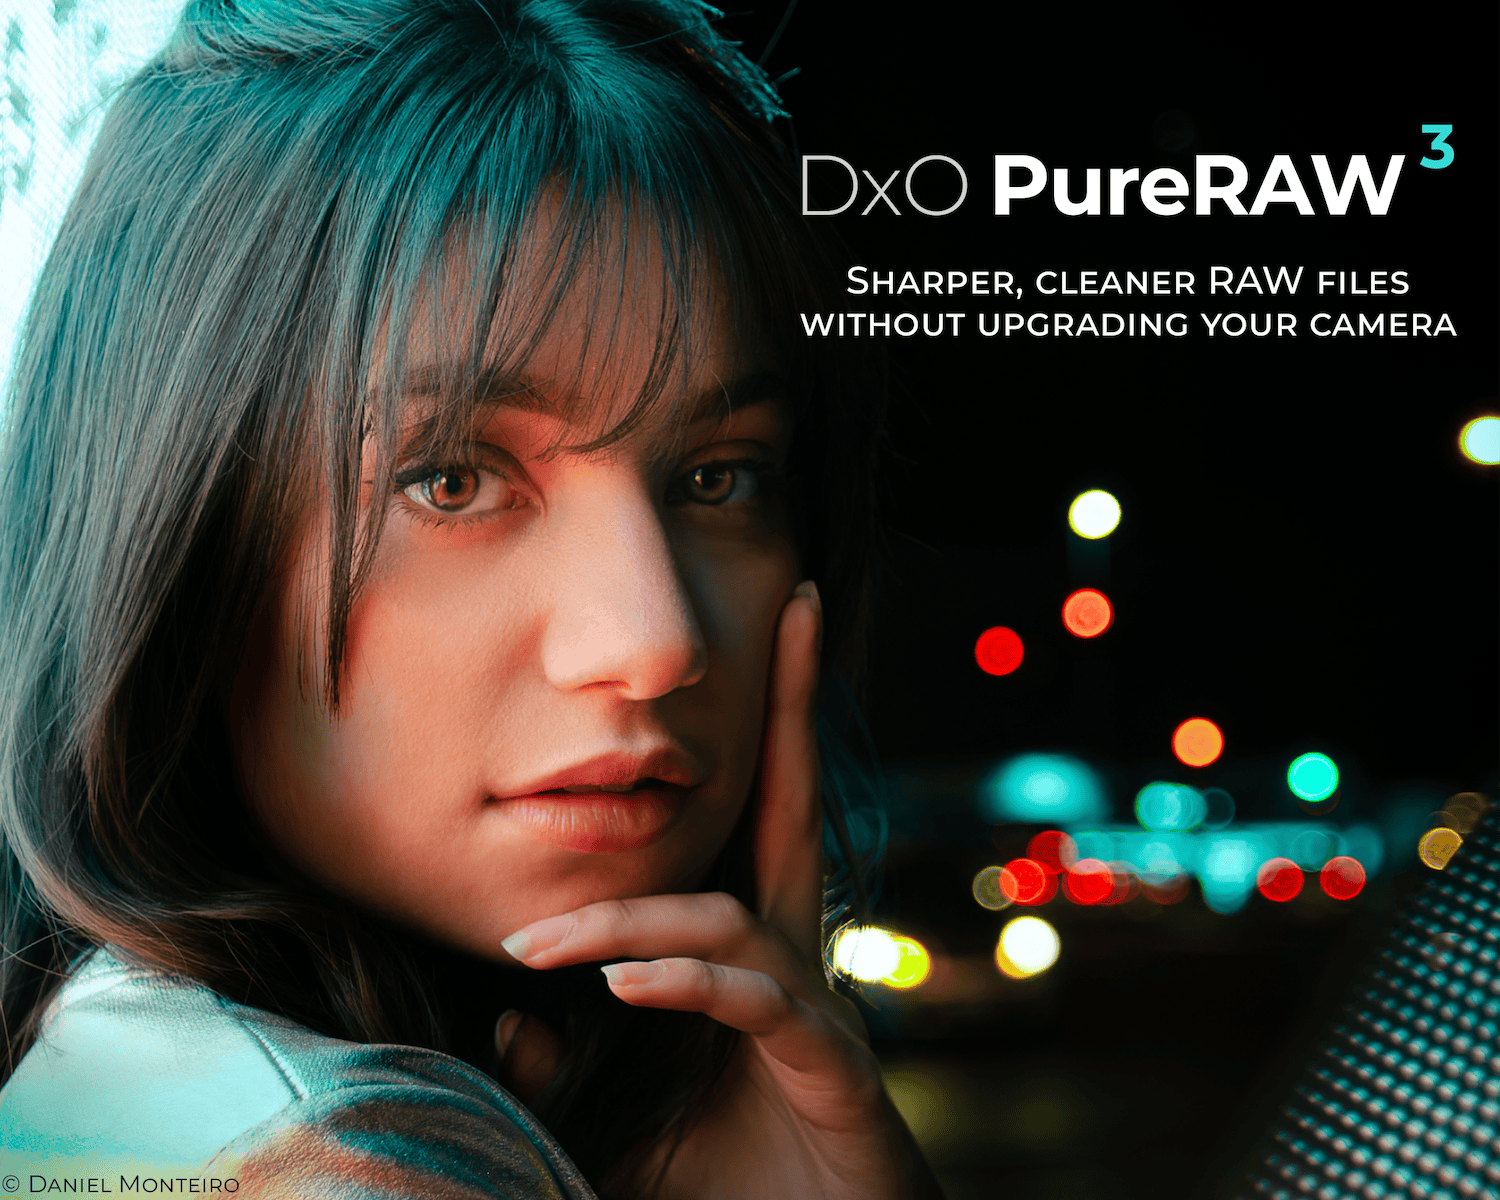 DxO PureRAW 3.4.0.16 download the new